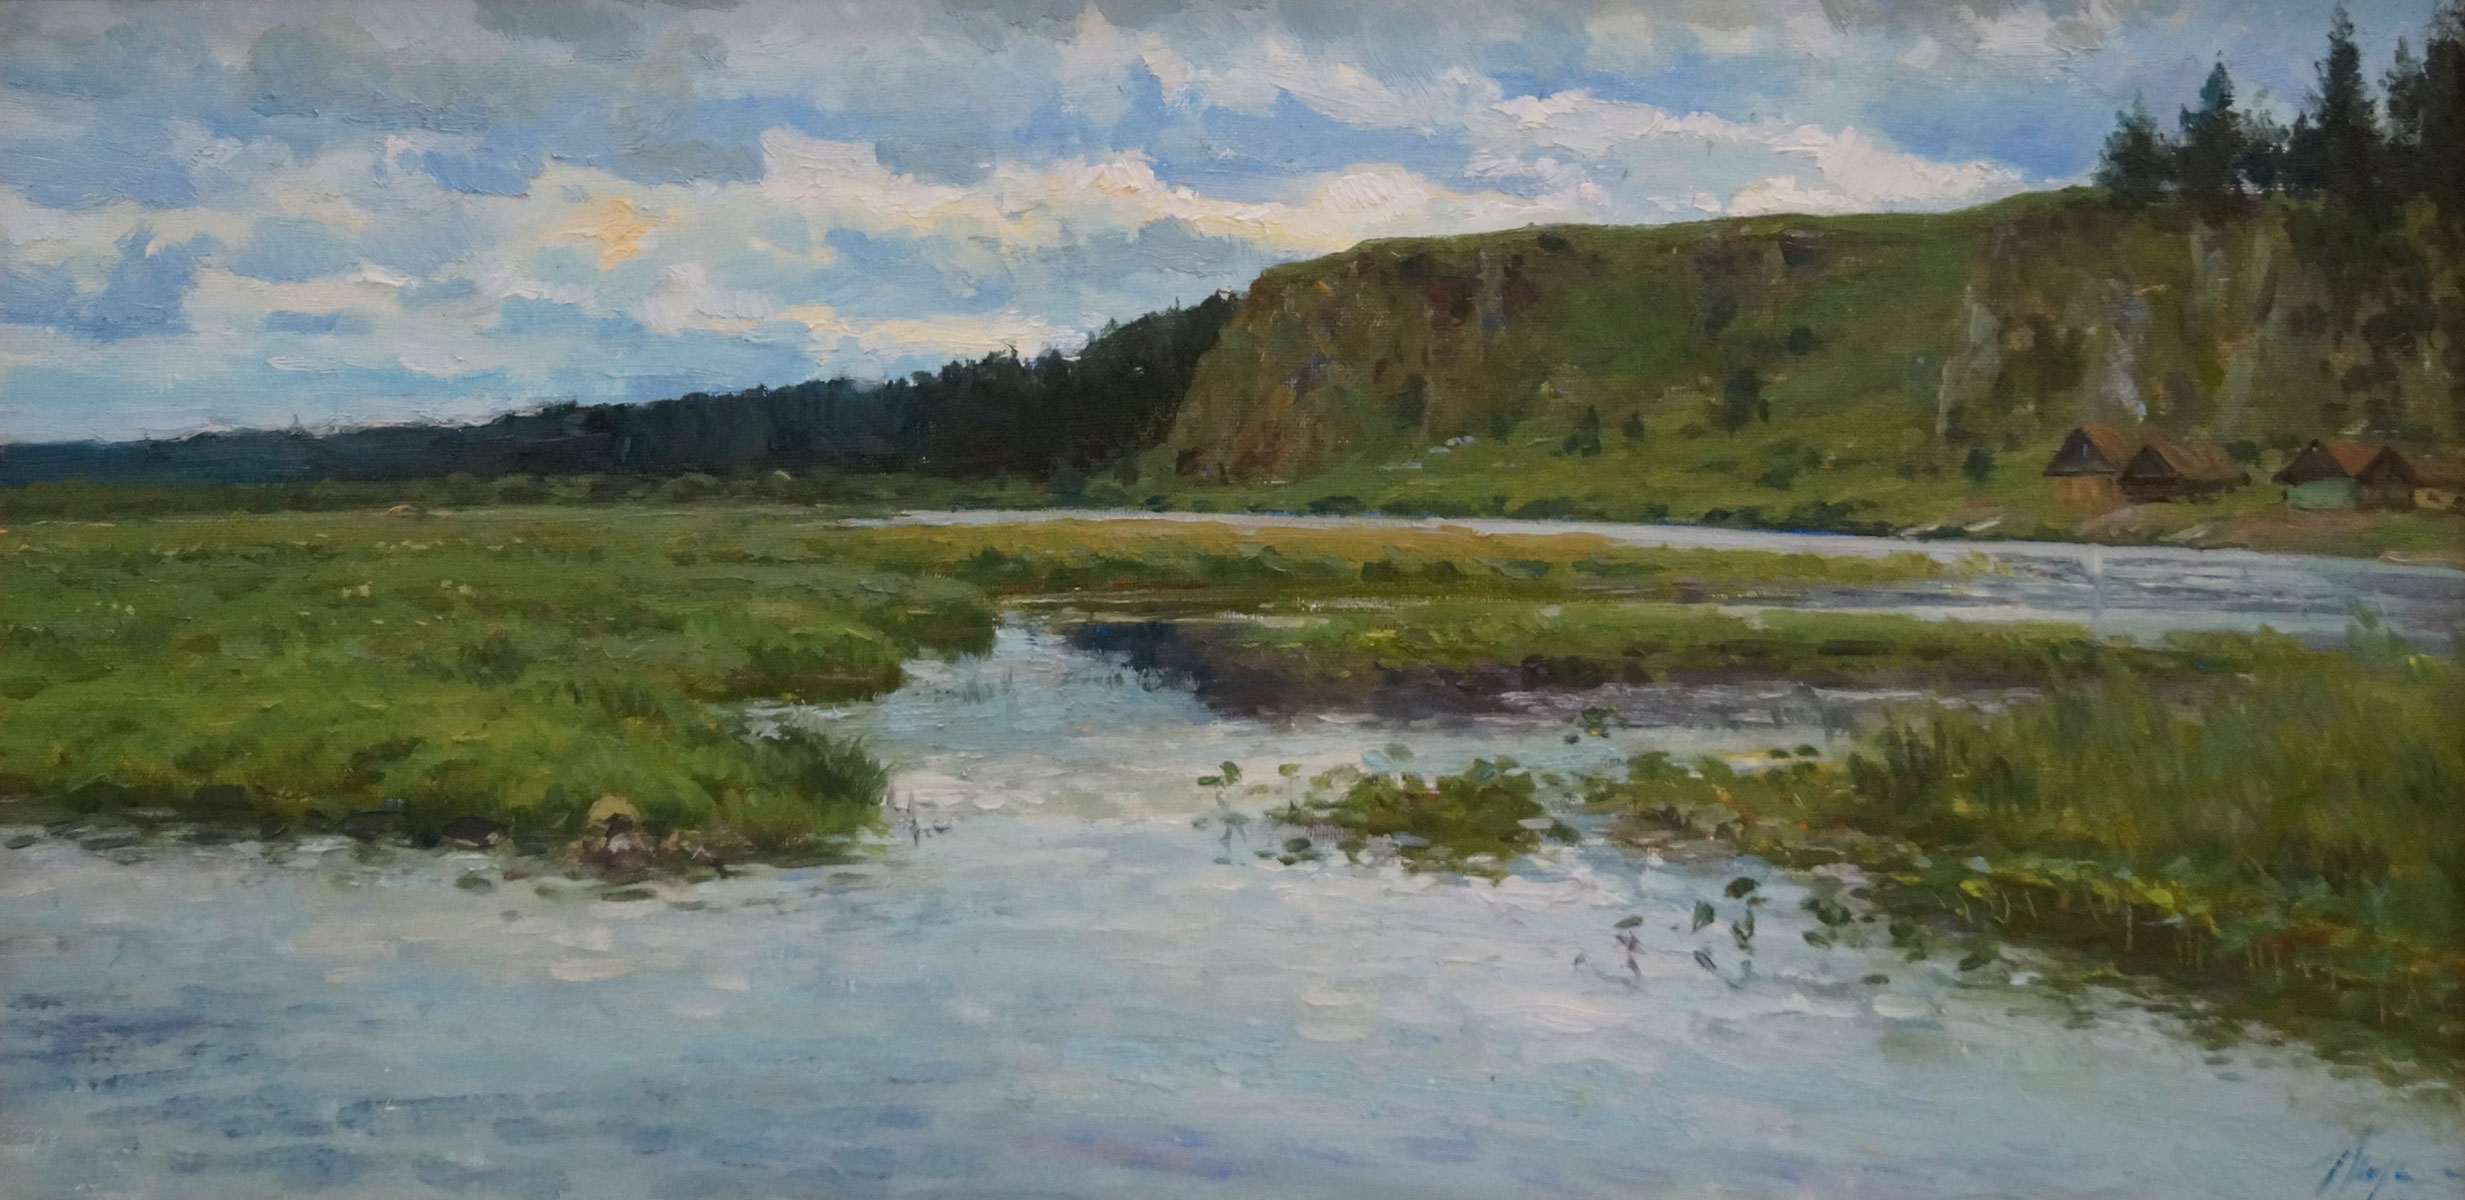 Chusovaya River Flows - 1, Rustem Khuzin, 买画 油